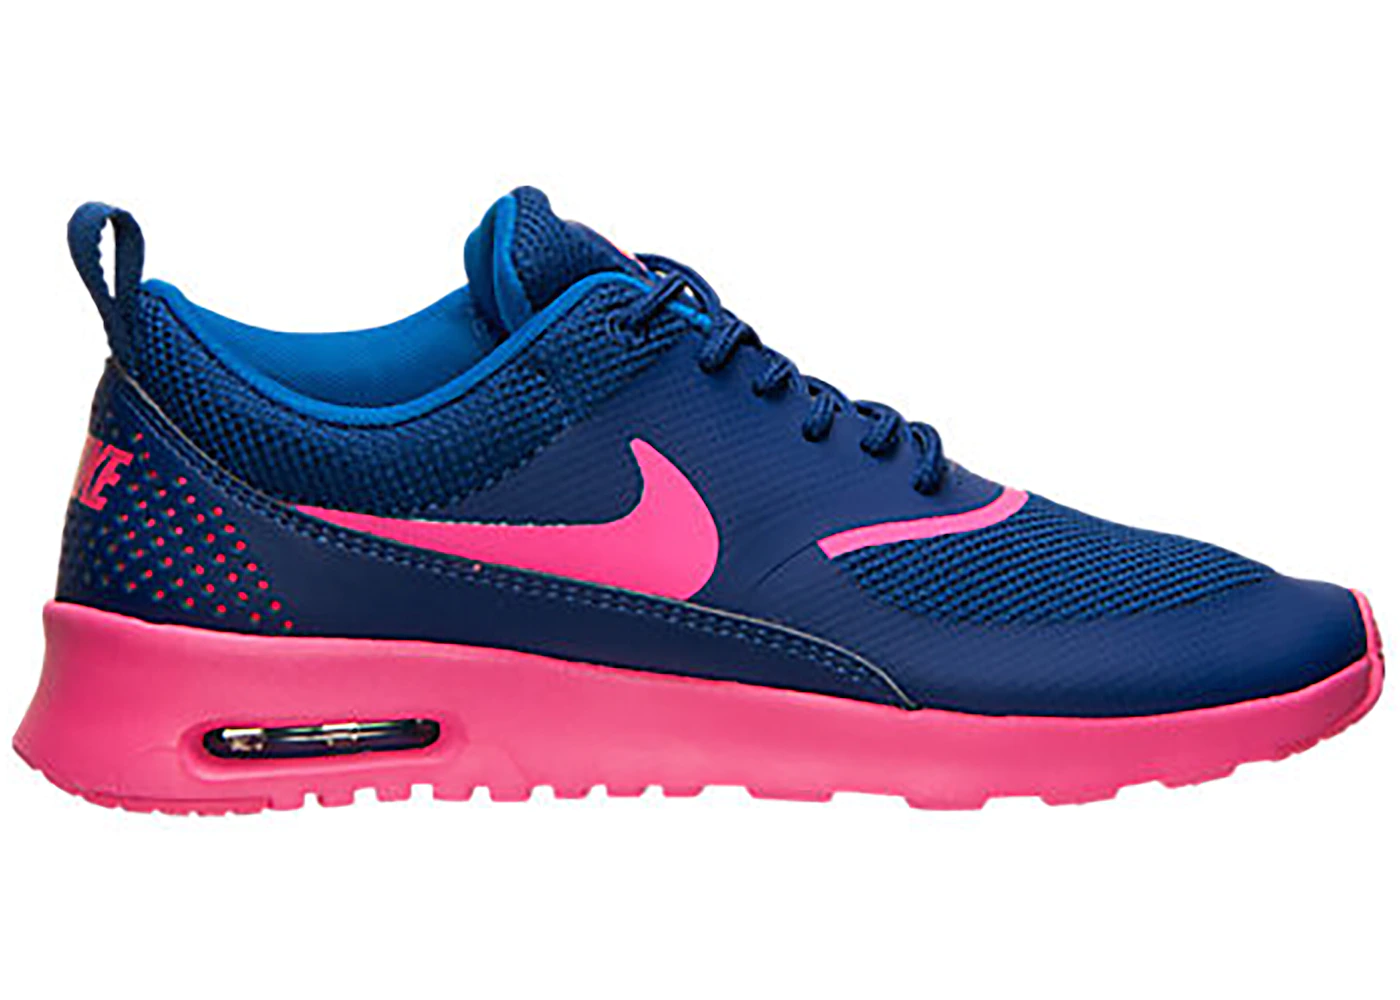 Representar Practicar senderismo Ewell Nike Air Max Thea Deep Royal Blue Hyper Pink (Women's) - 599409-405 - US